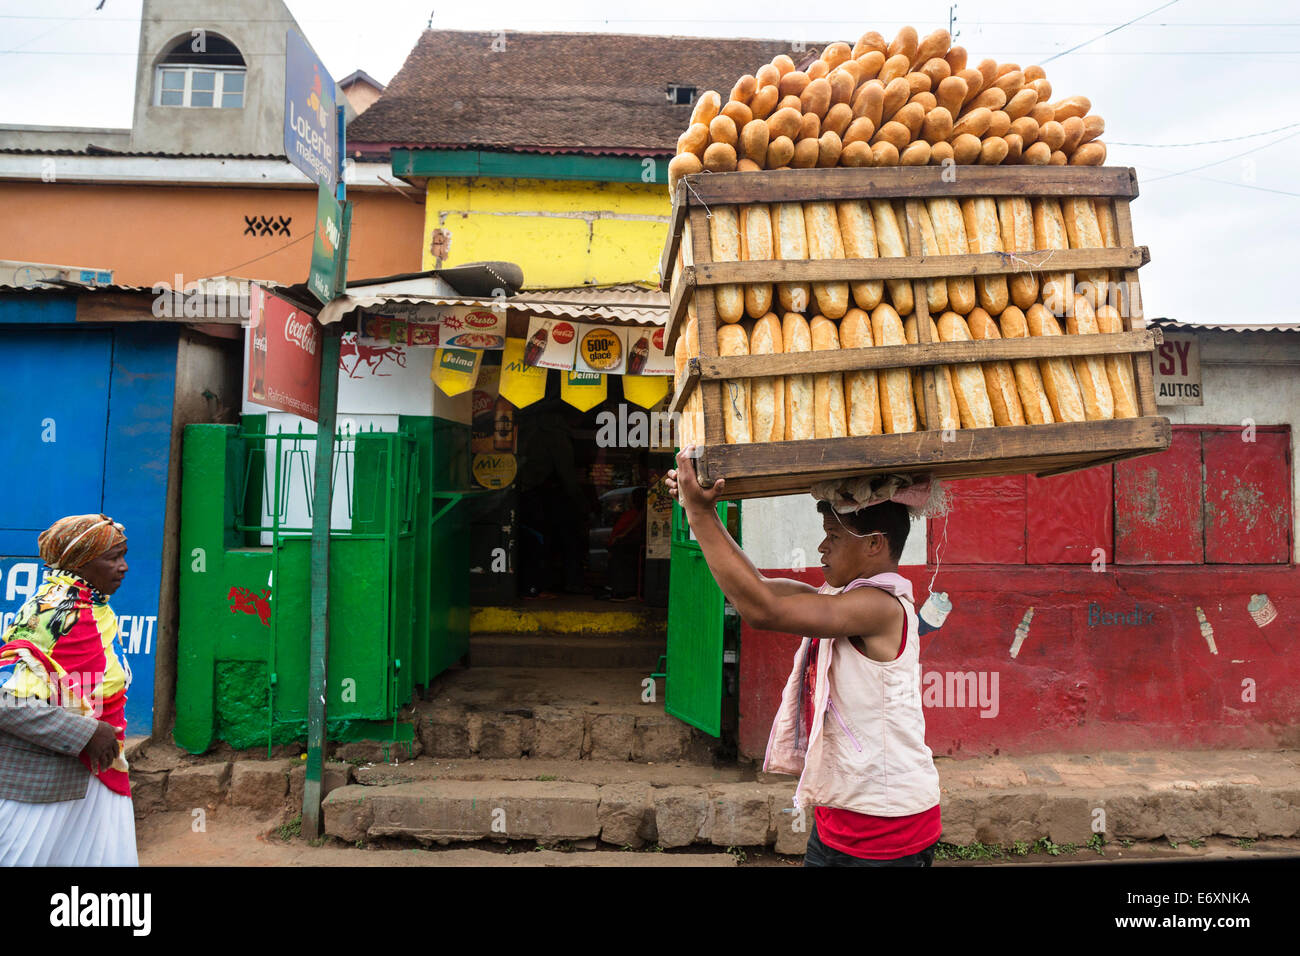 Man delivering bread, Bread deliverer, street scenario, Antananarivo, capital, Madagascar, Africa Stock Photo